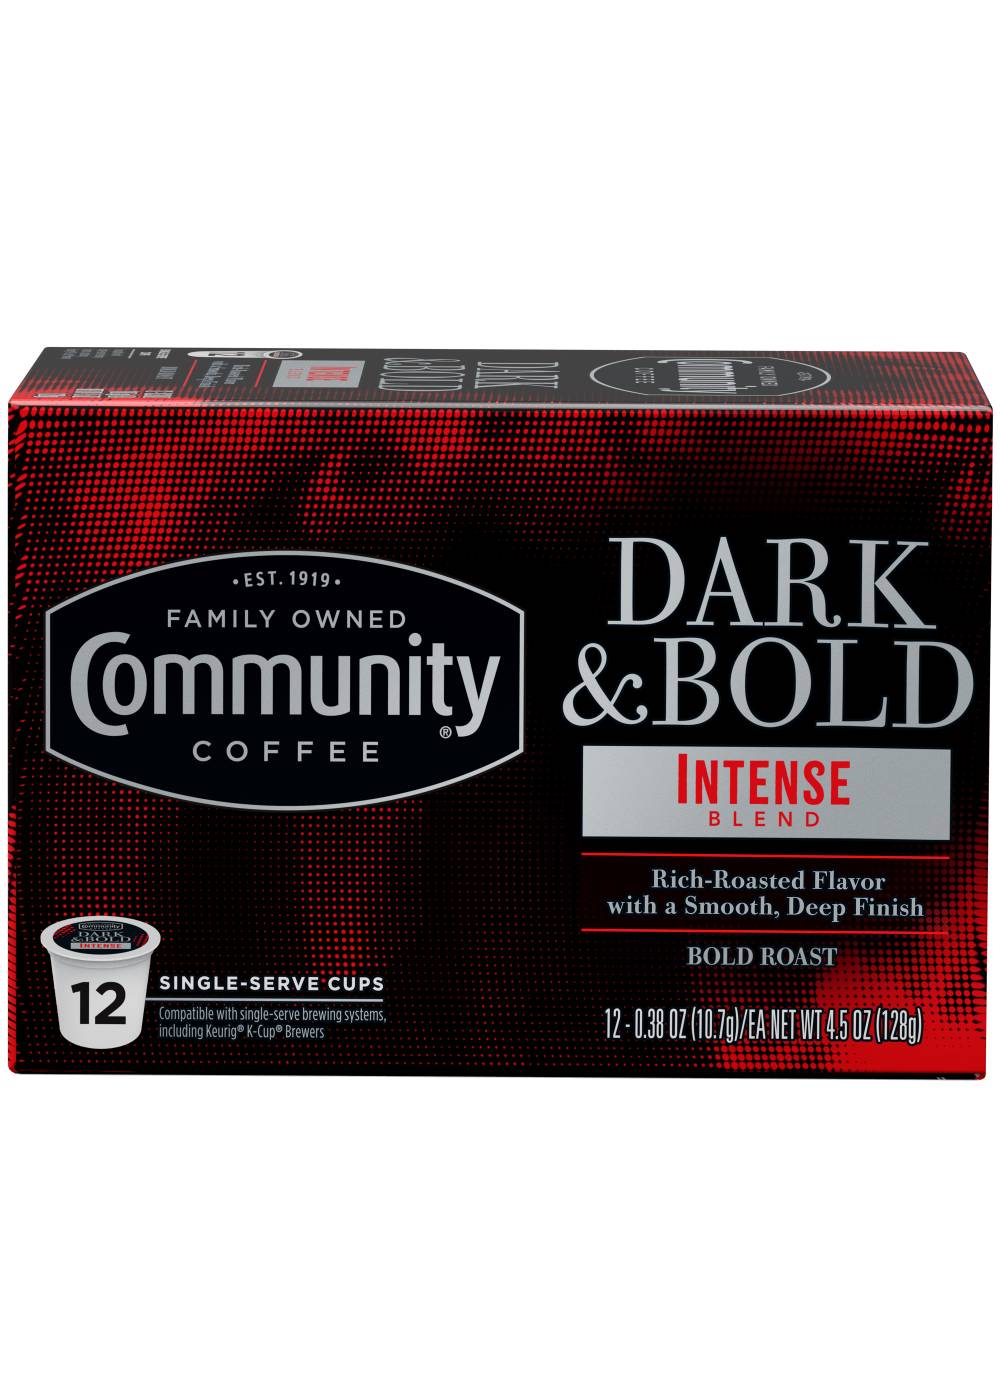 Community Coffee Dark & Bold Intense Blend Single Serve Coffee K Cups; image 1 of 3